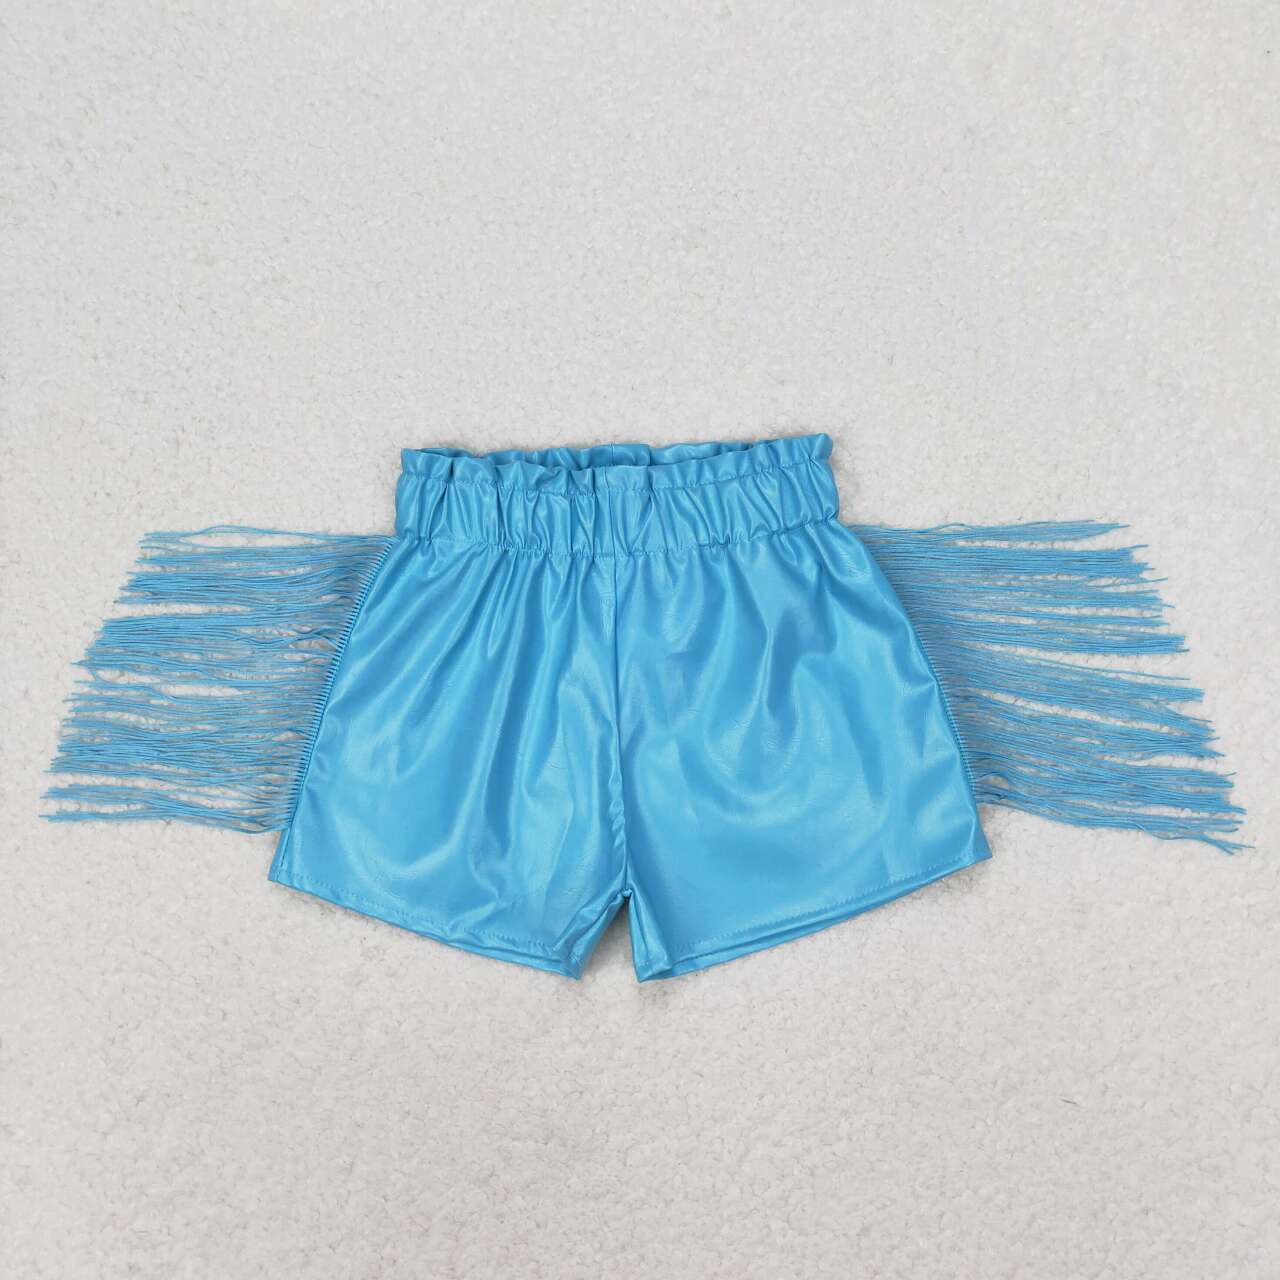 SS0241  Blue Leather Tassel Girls Summer Shorts